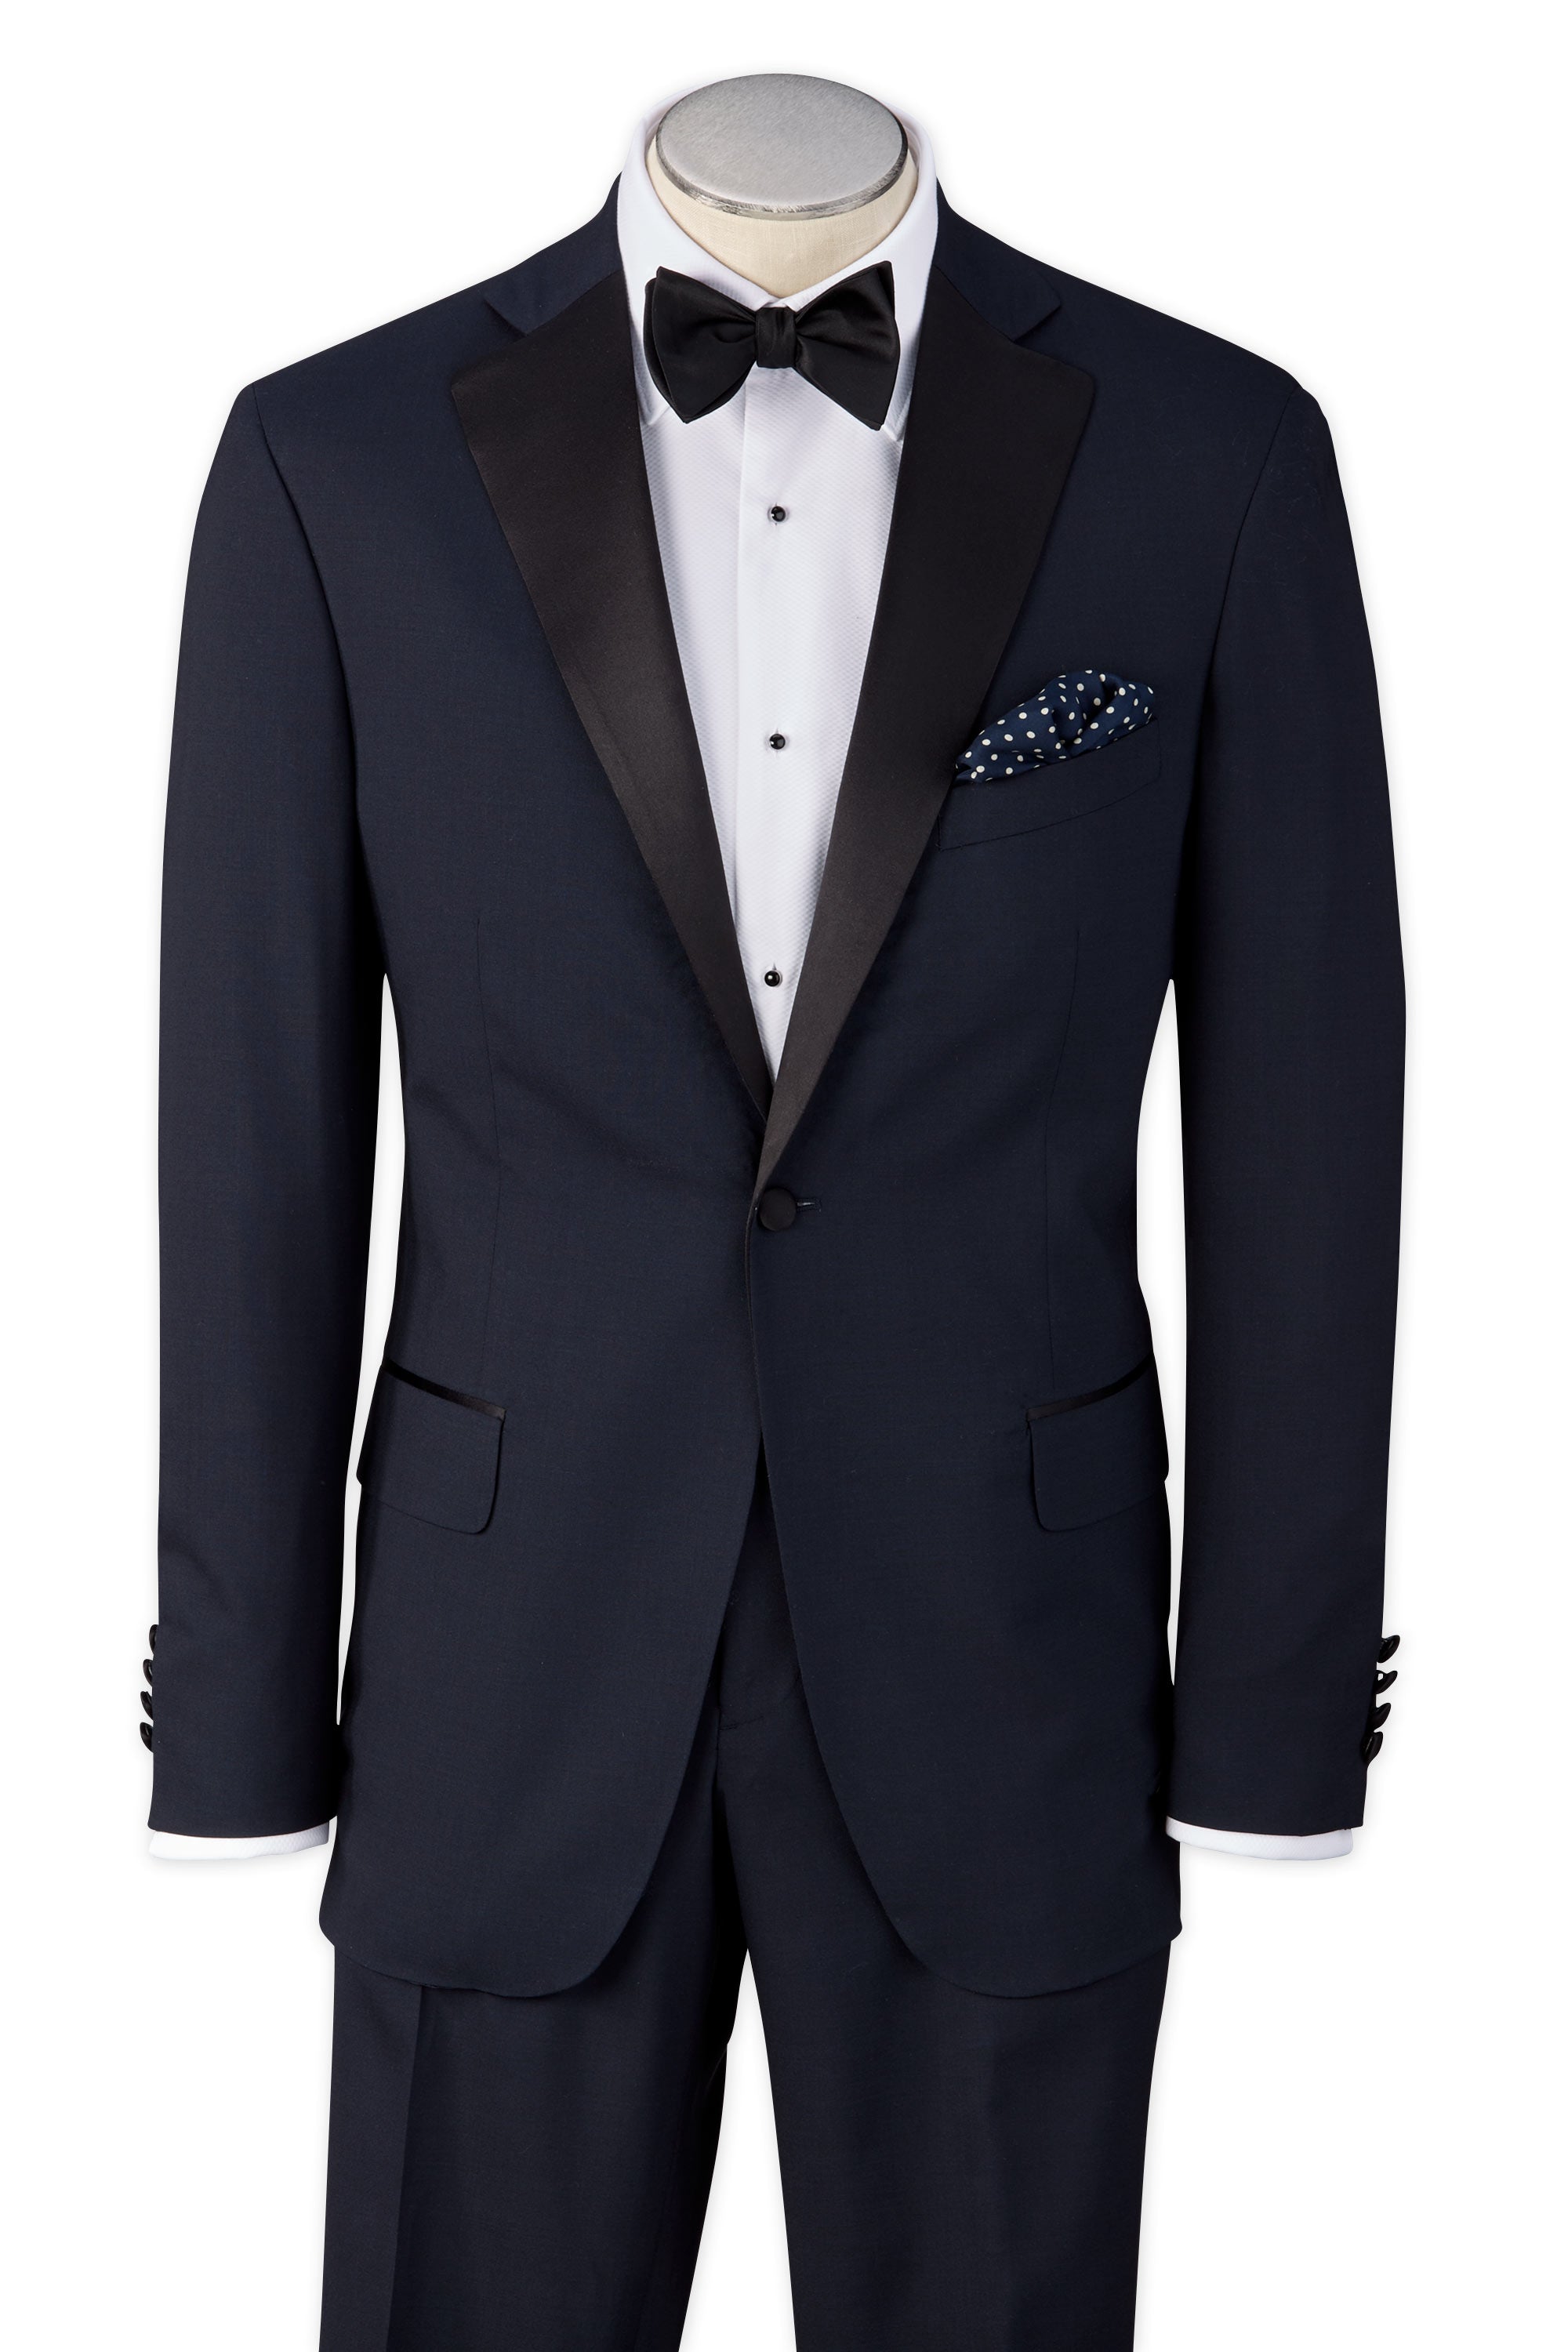 Men's Tuxedo Jacket Modern Cut - NAVY 98/2 WOOL/LYCRA SUPER100